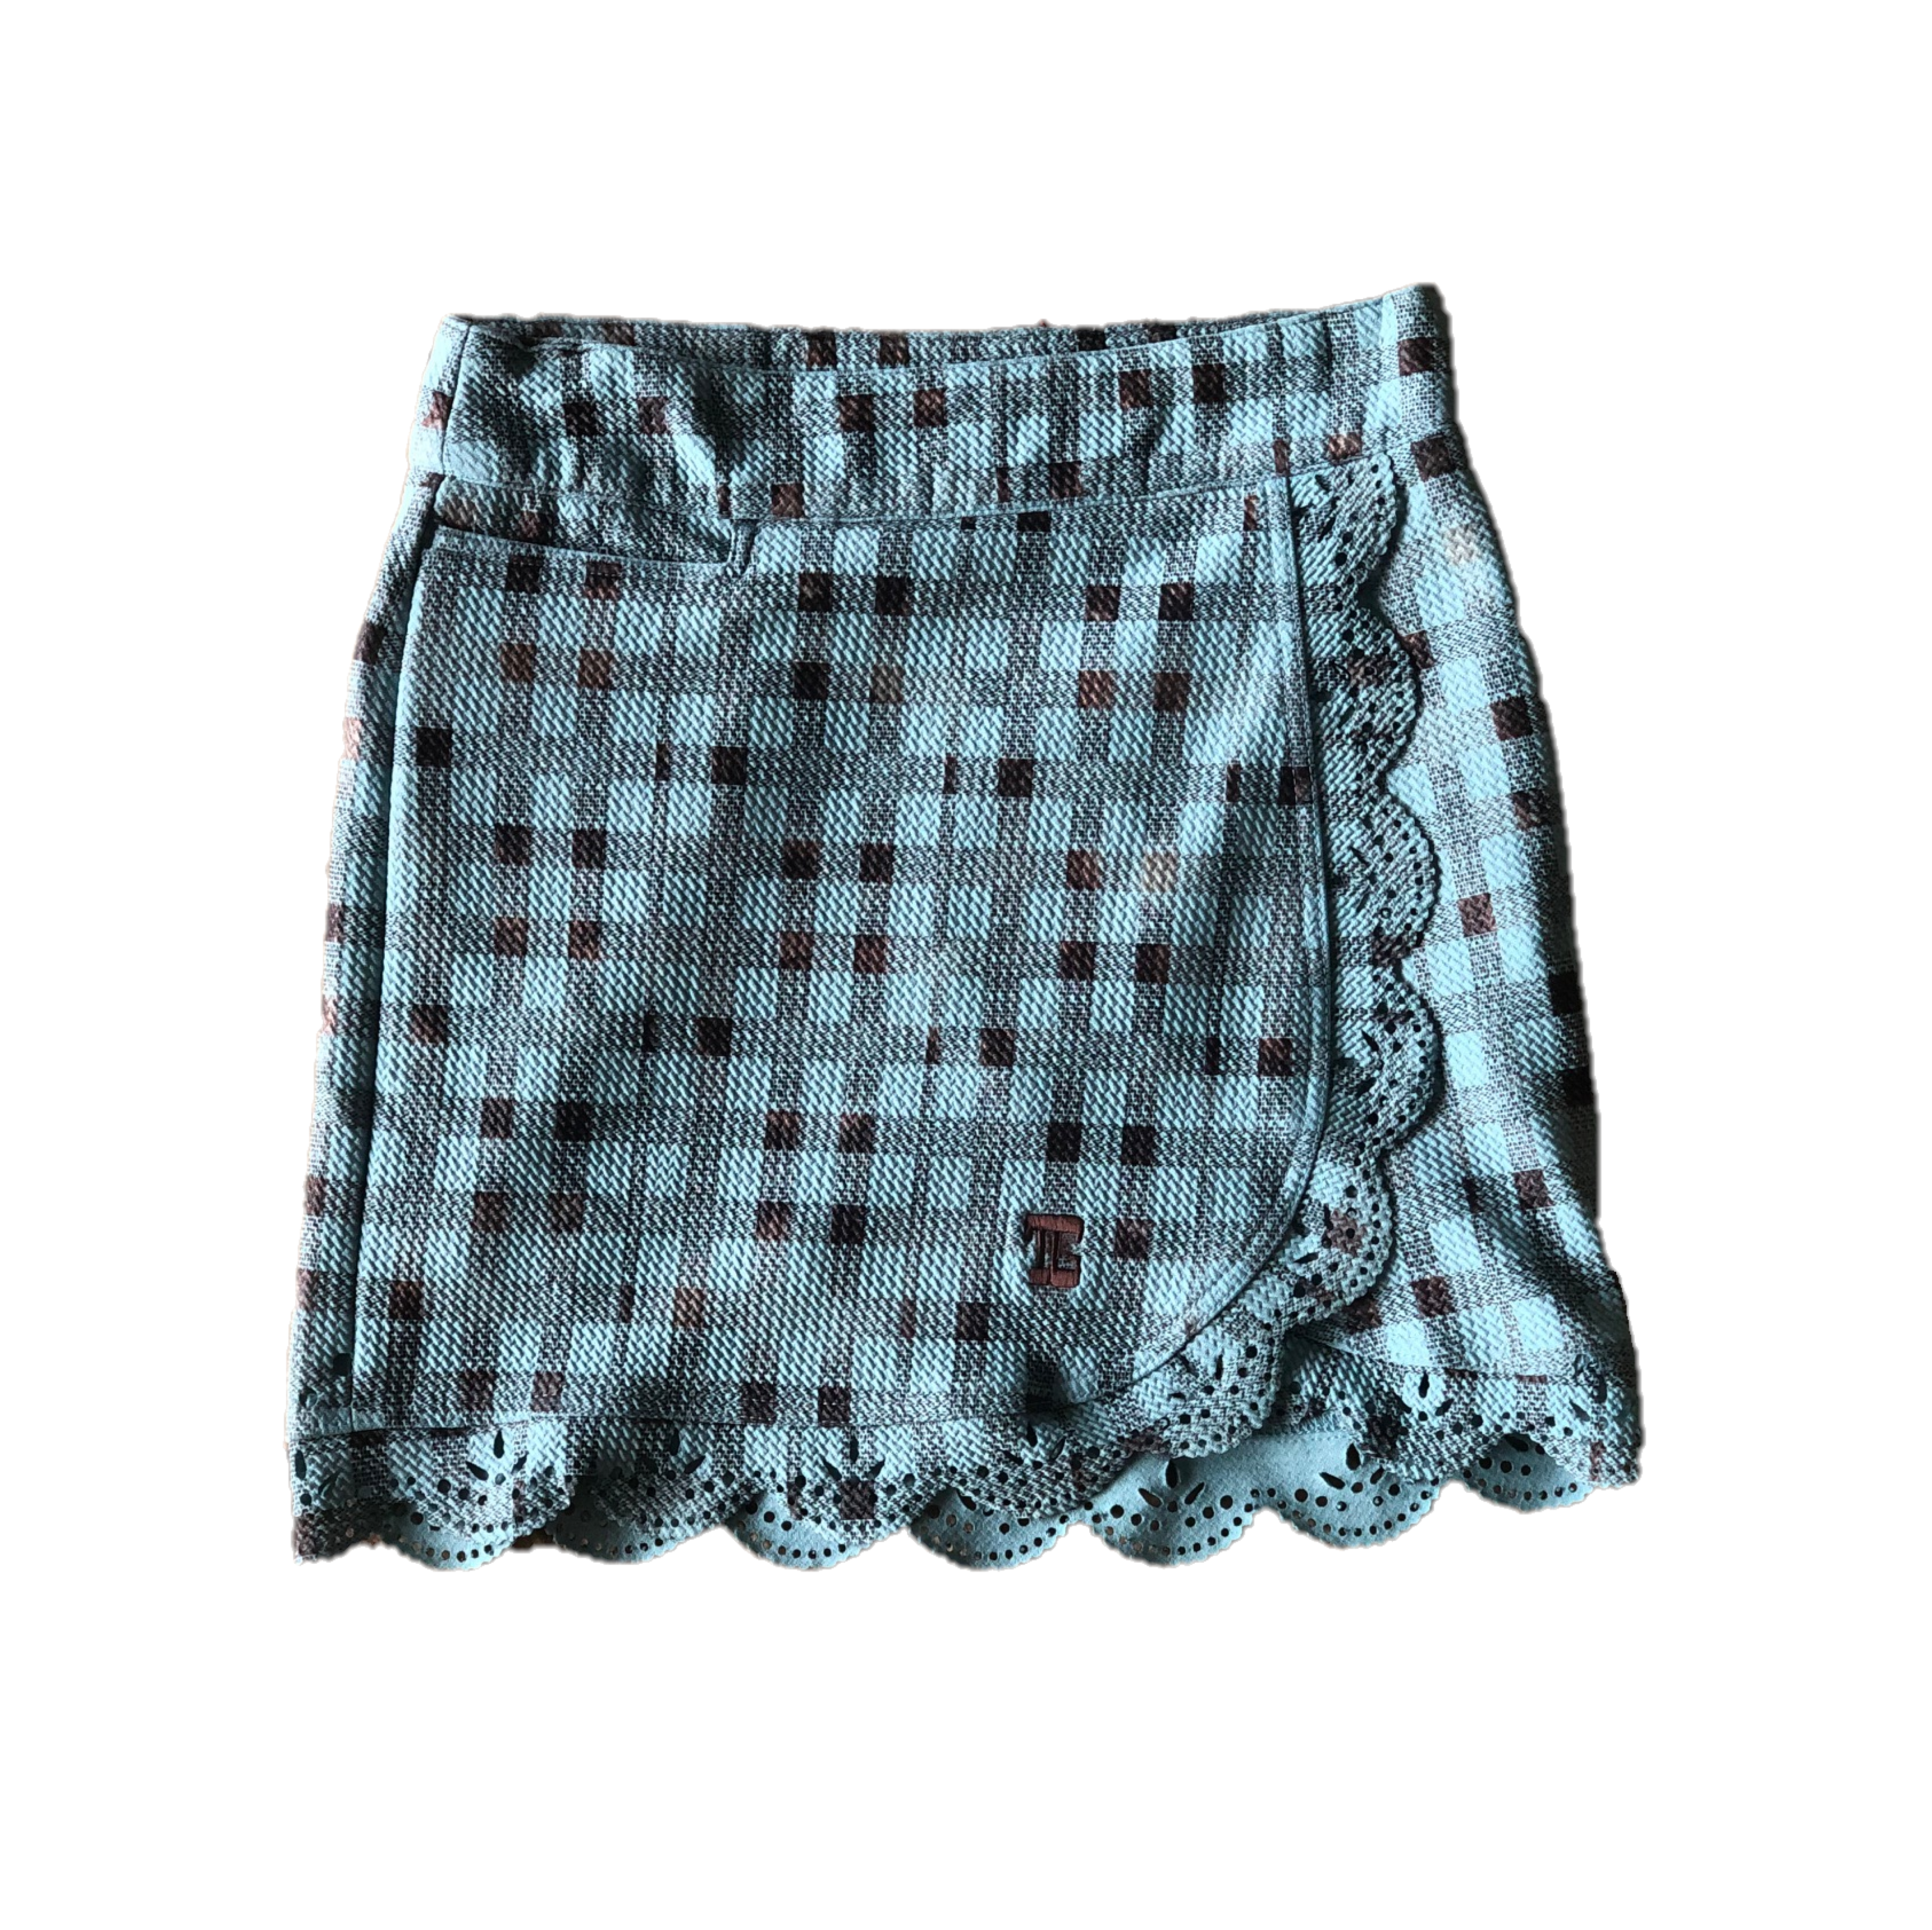 LS-041C || Ladies Skirt Wrap Around Blue With Black & Grey Check Hem.